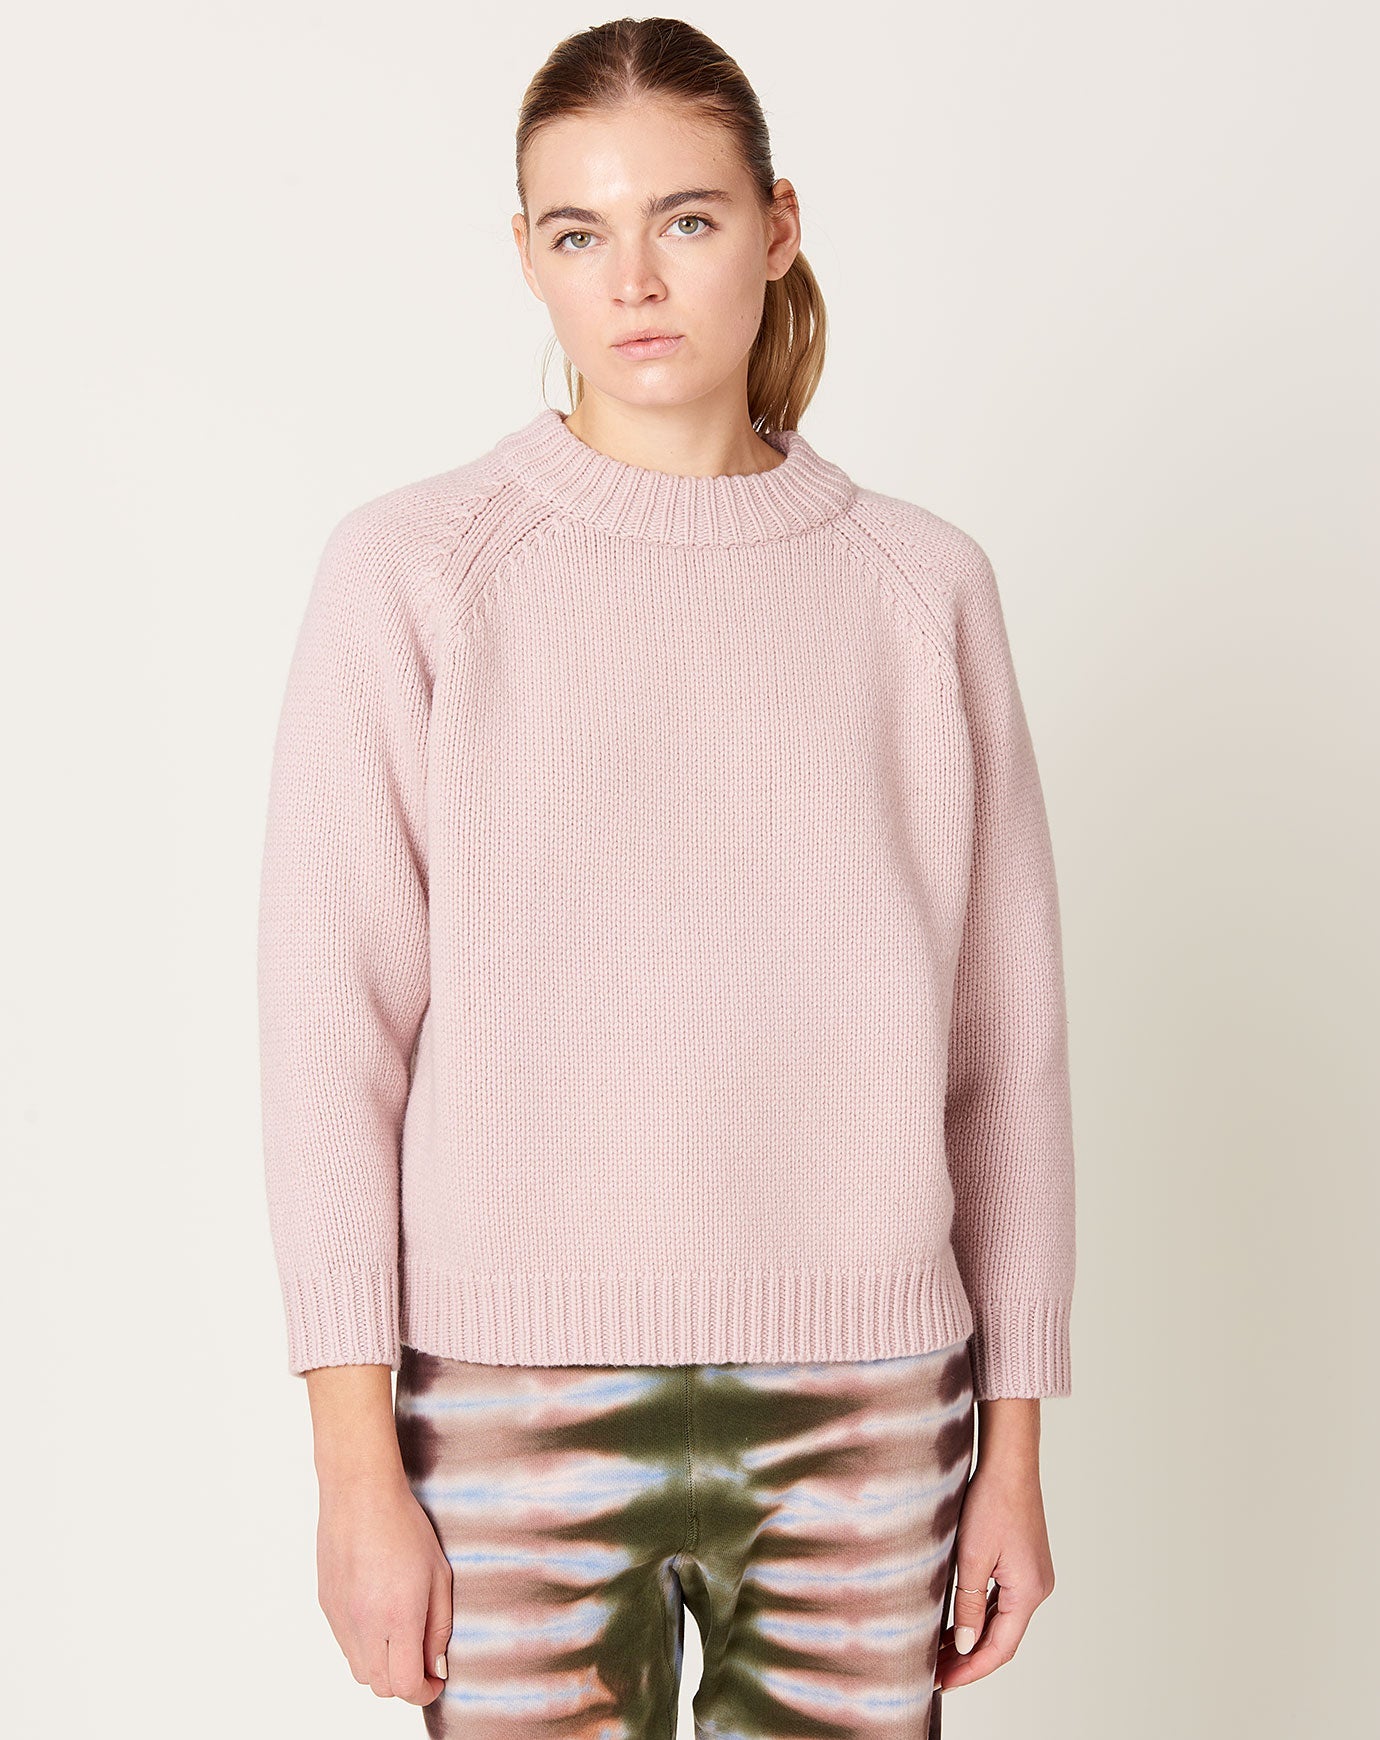 Demylee Fonda Sweater in Blush